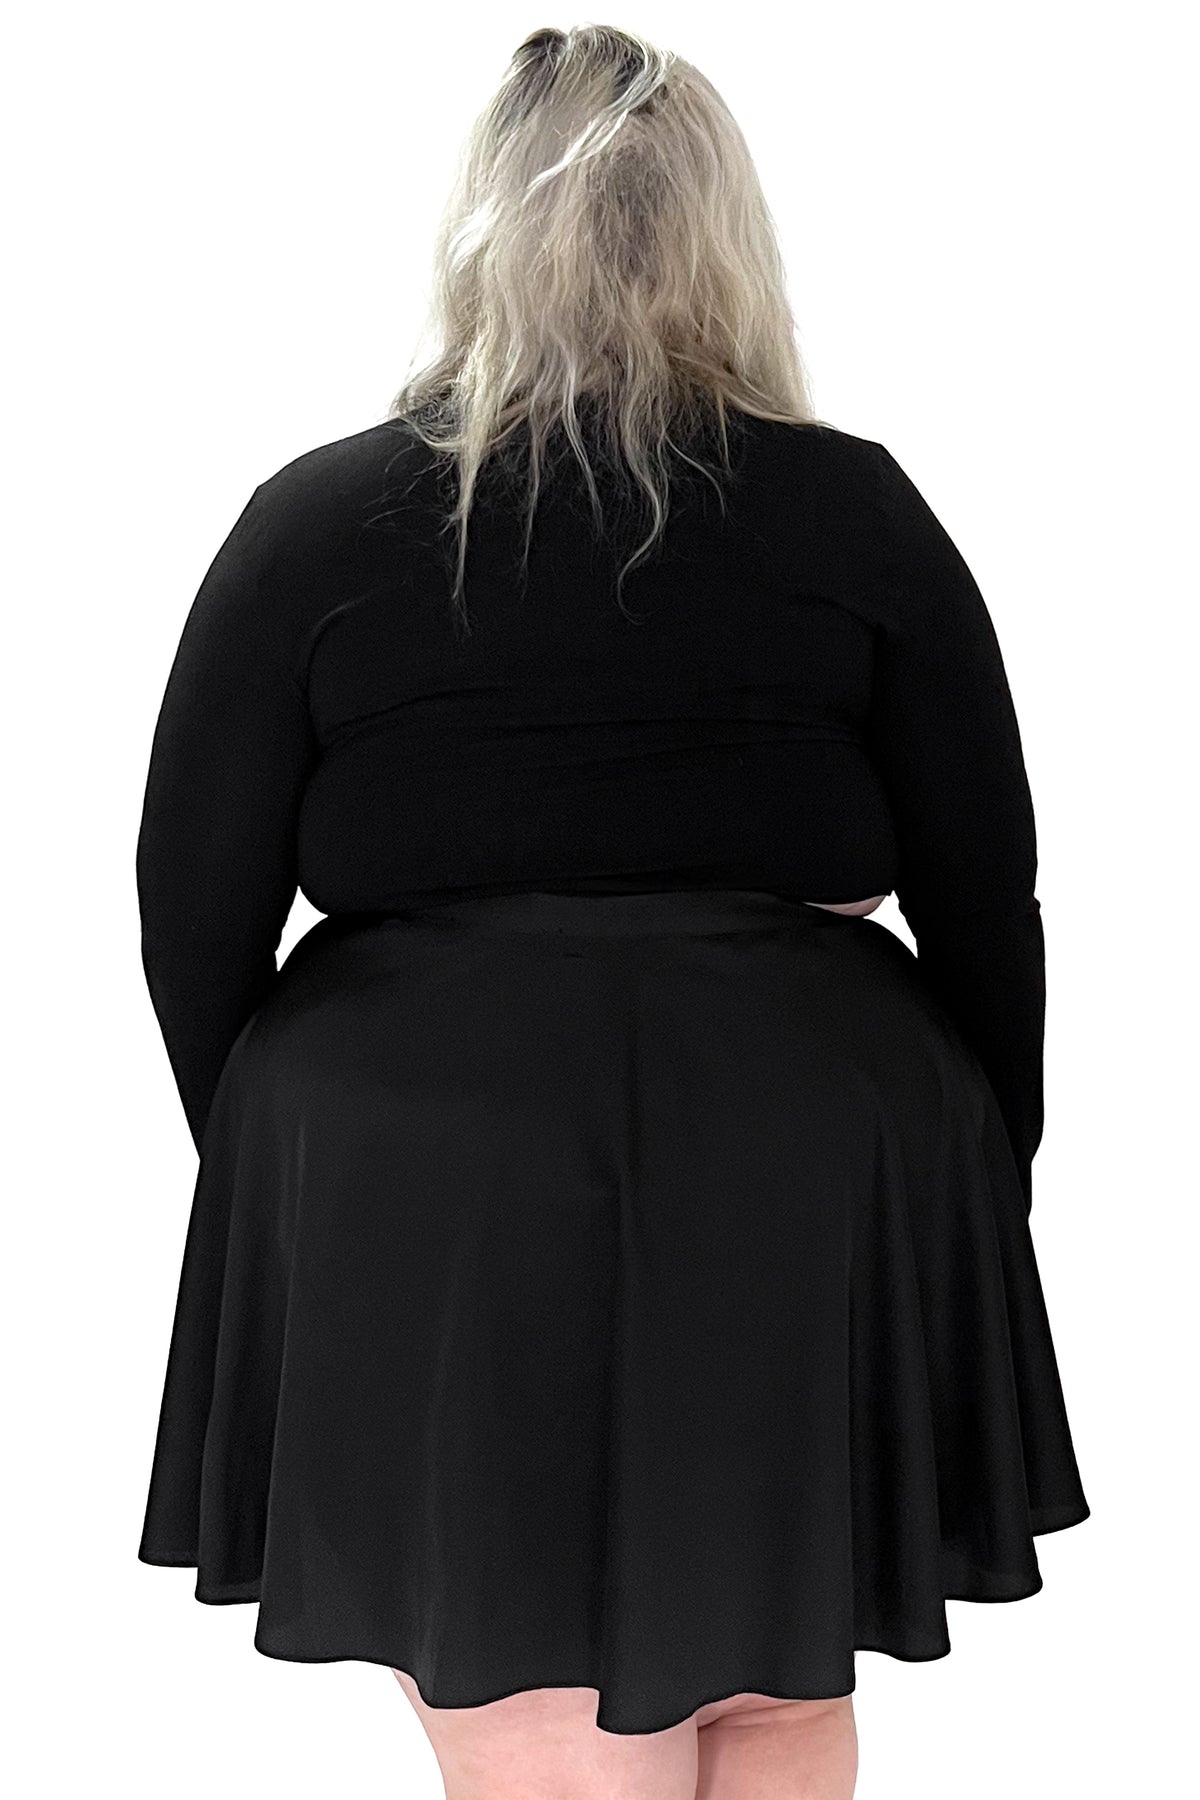 short black satin wrap skirt with adjustable waist ribbon tie